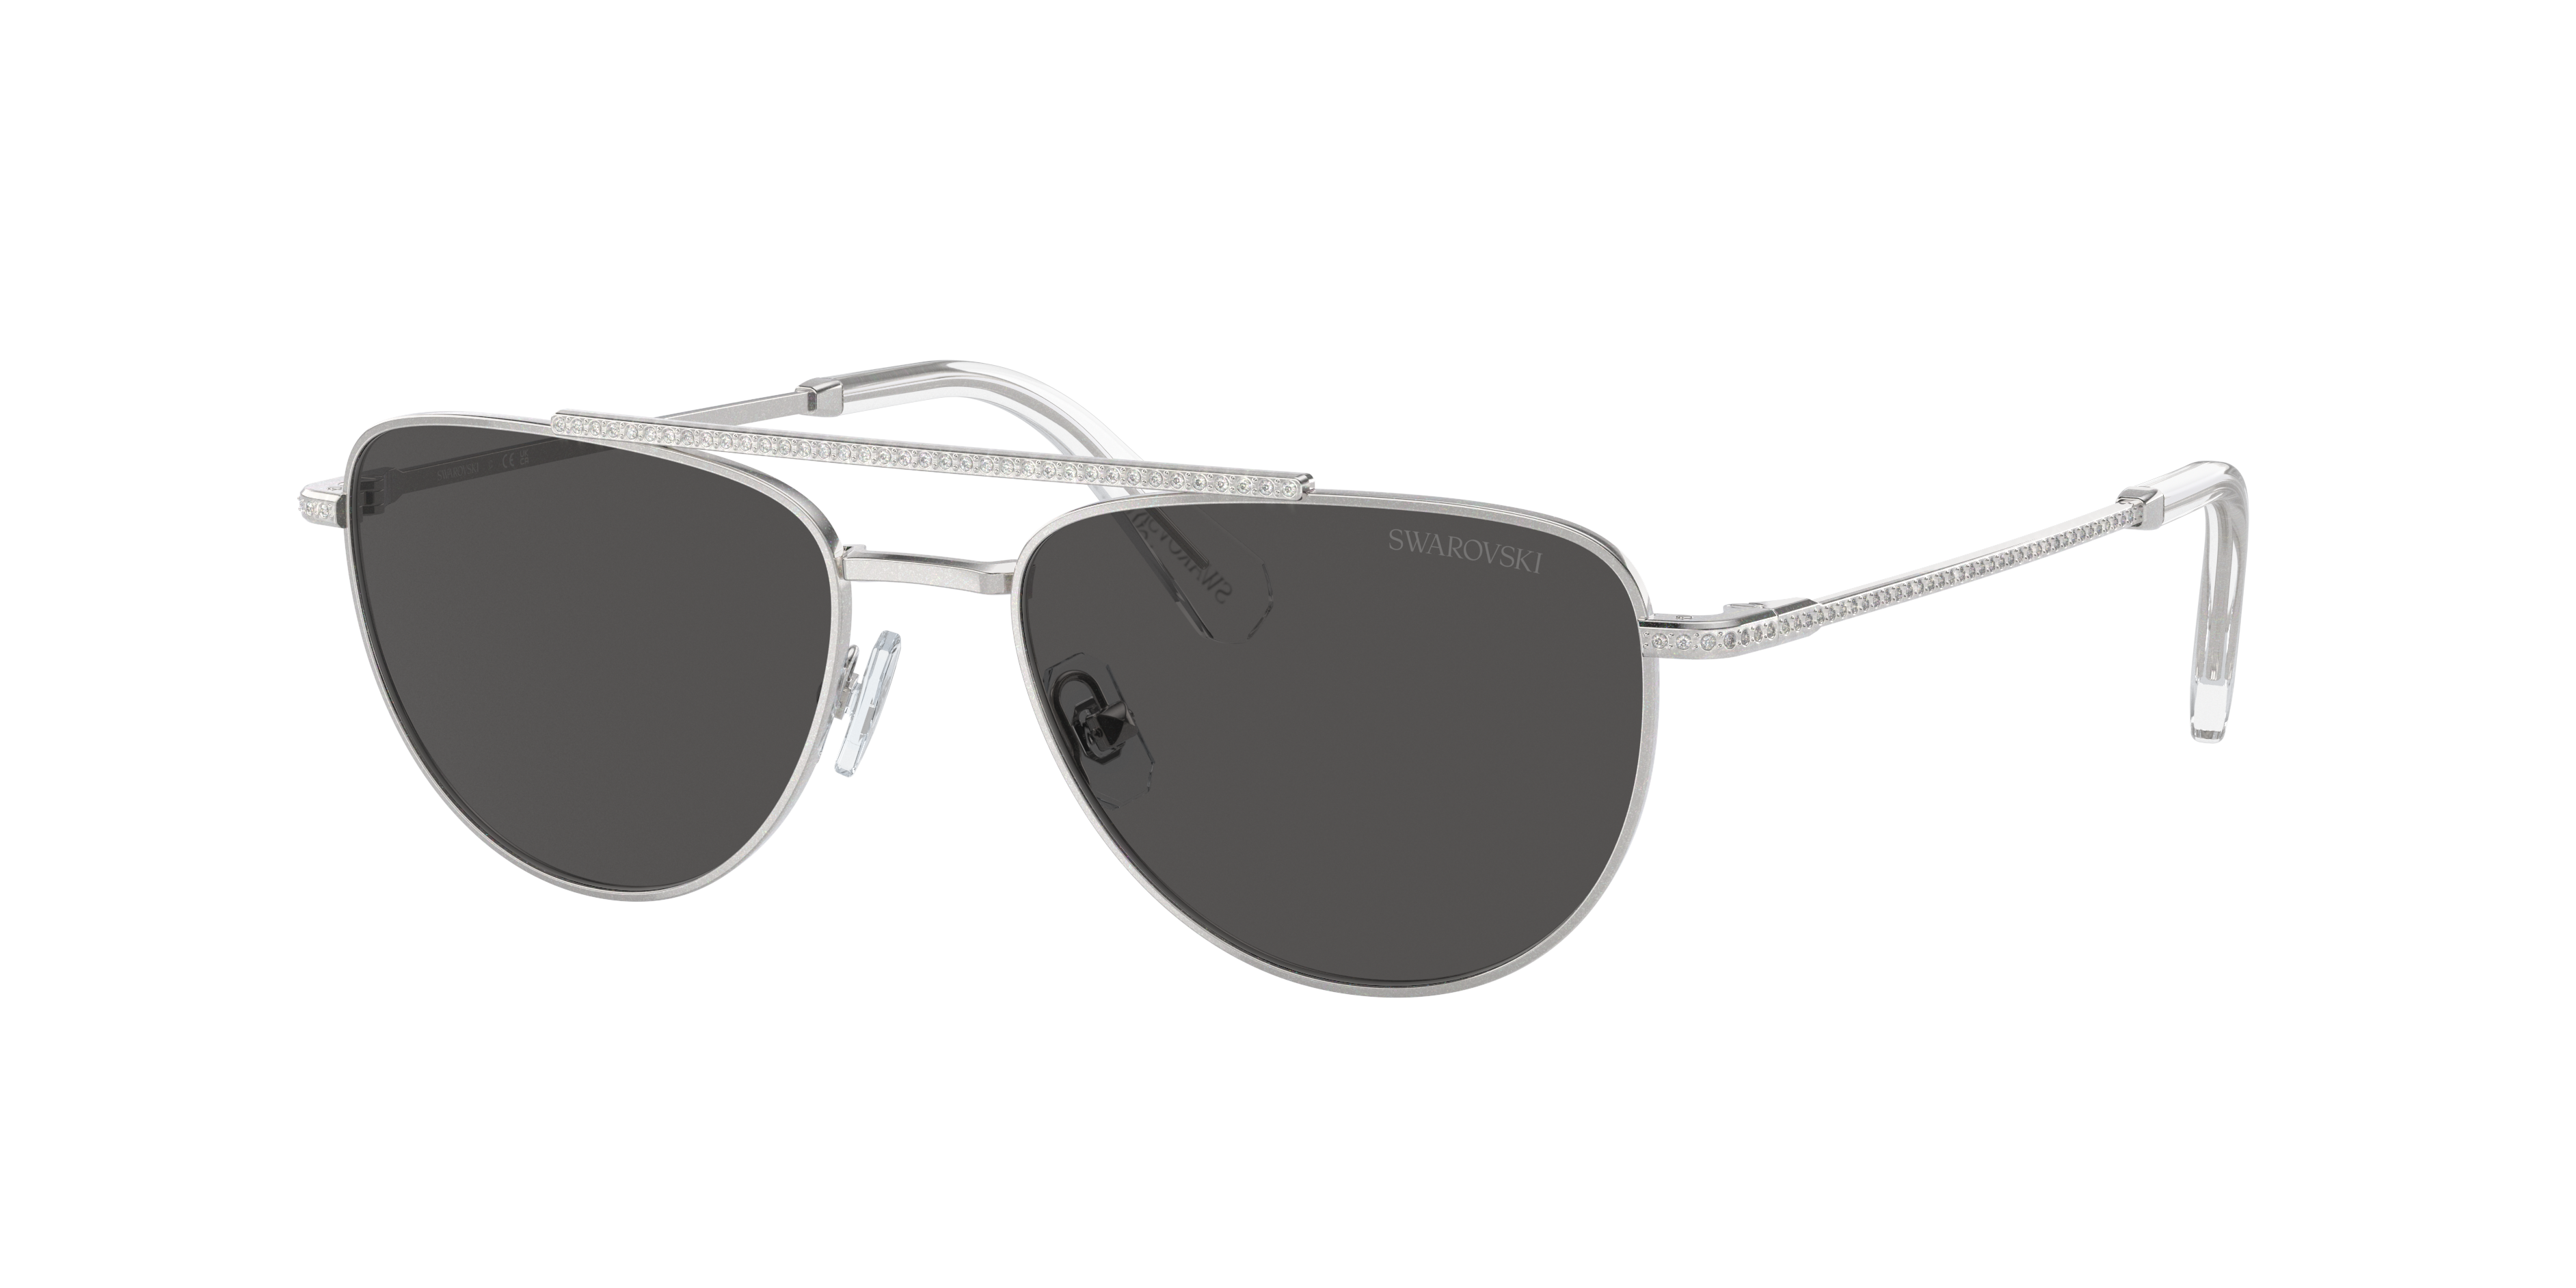 SWAROVSKI SK7007 Silver - Women Sunglasses, Dark Grey Lens